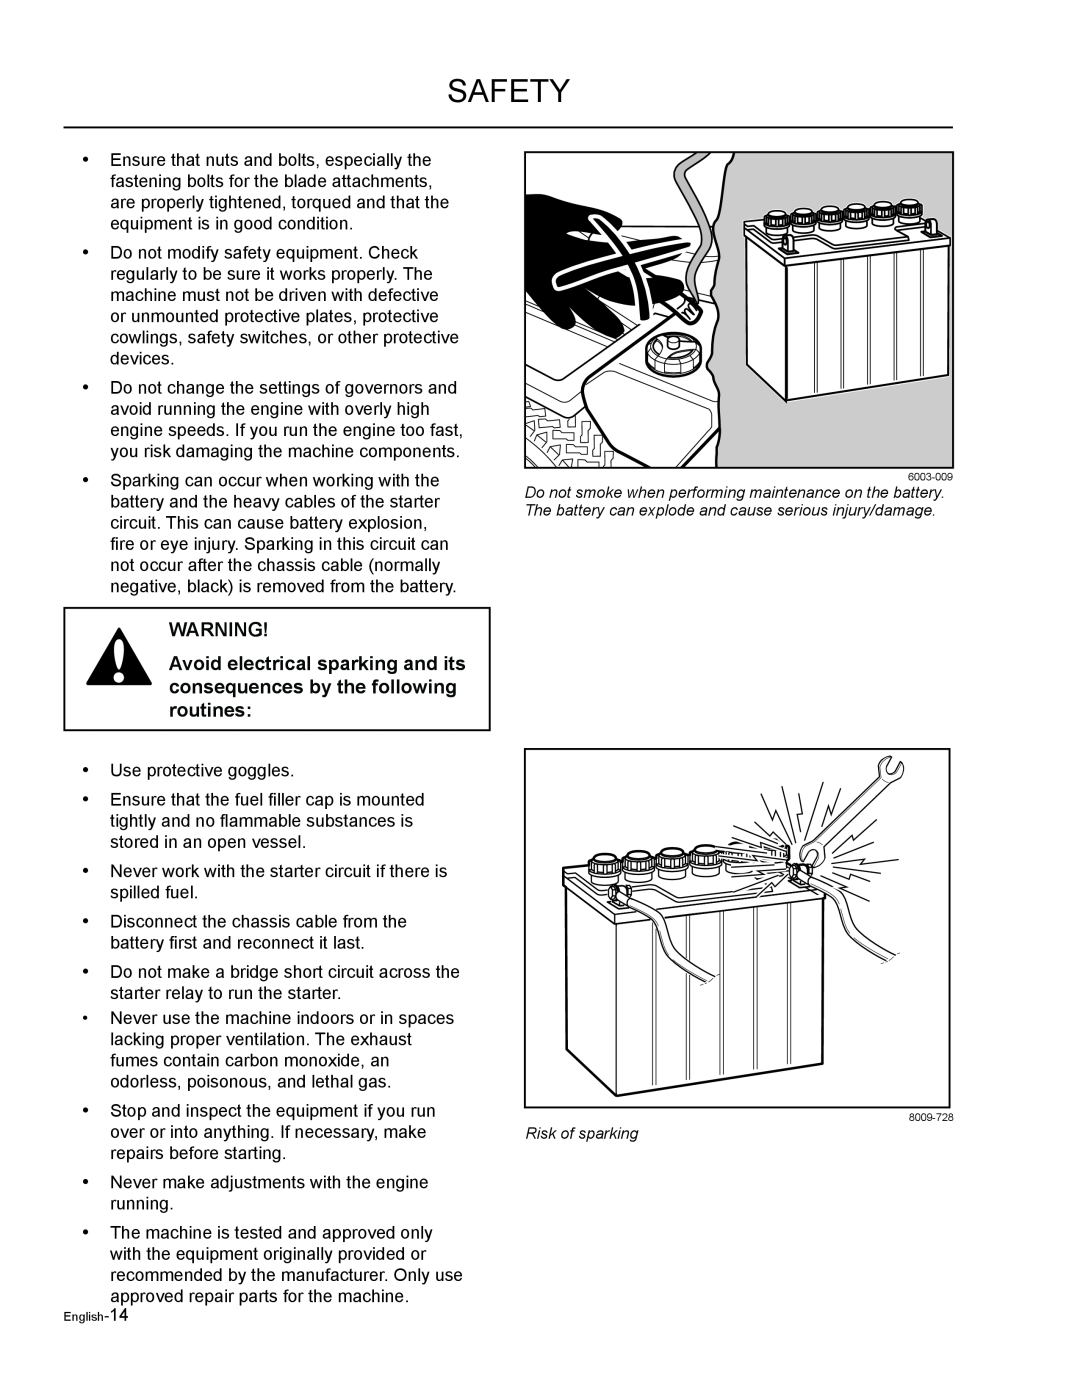 Husqvarna EZF 3417/ 965879301 manual Safety, Risk of sparking, English-14 